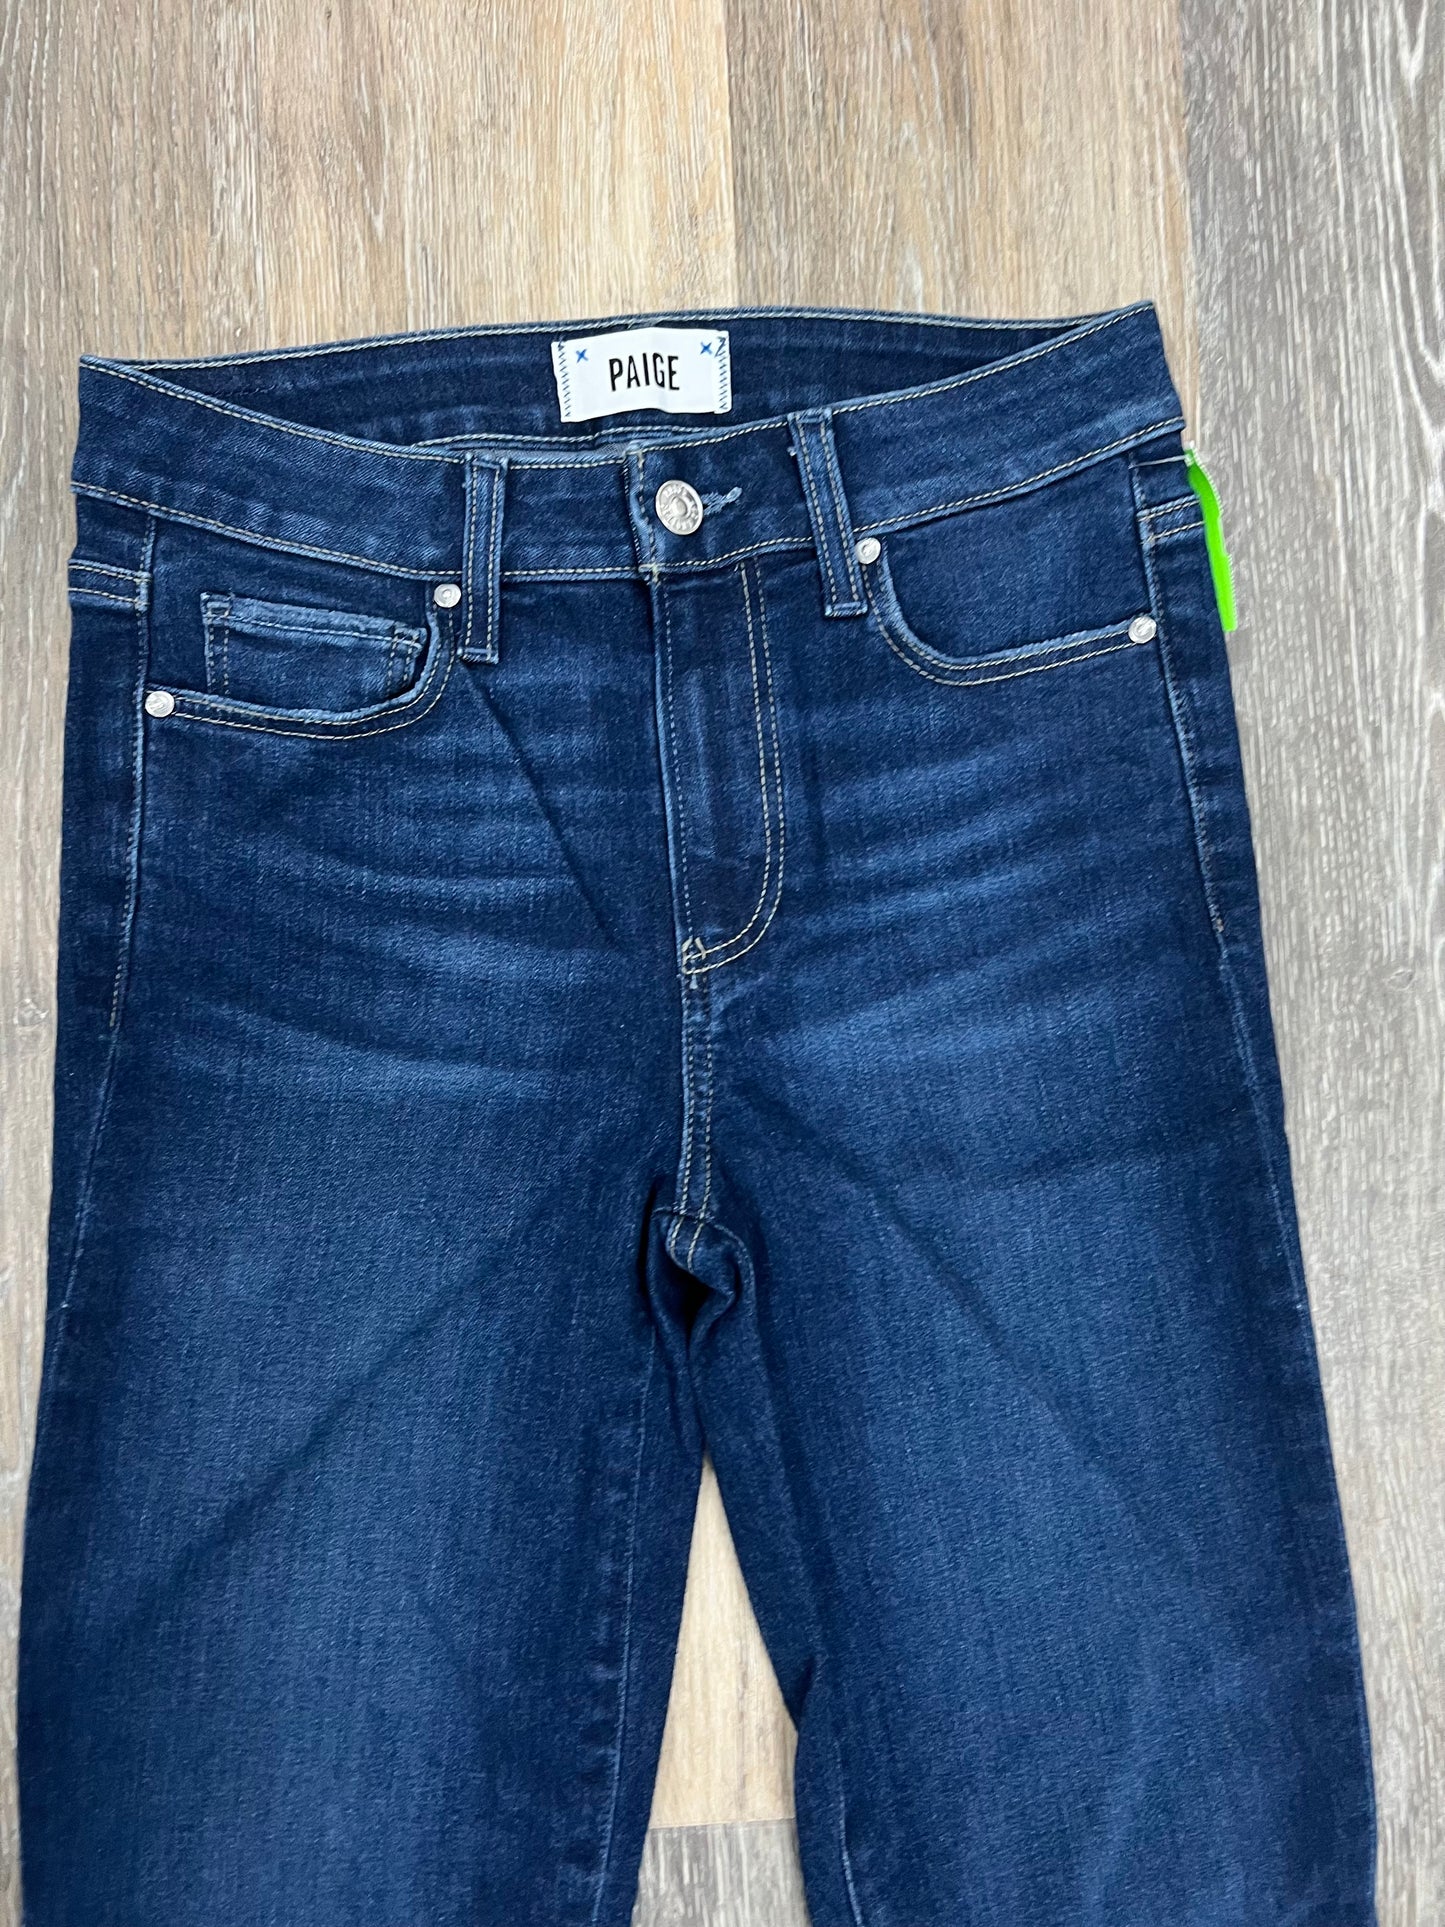 Jeans Designer By Paige  Size: 2/26